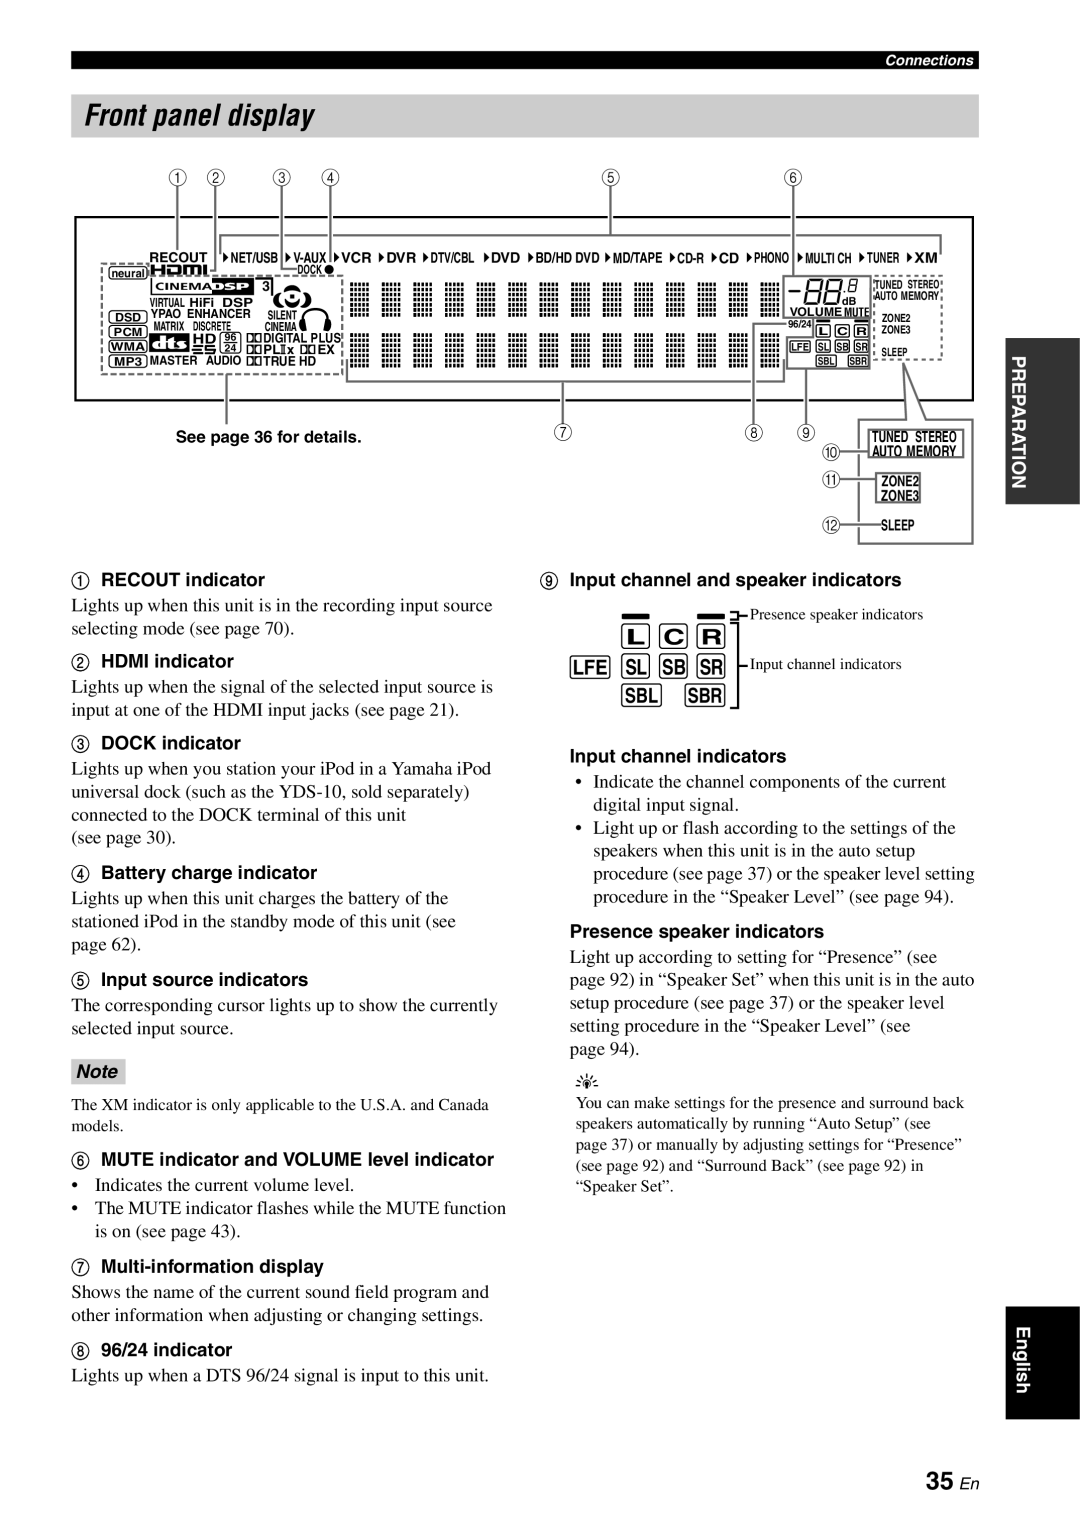 Yamaha RX-V3800 Front panel display, 35 En, L C R, Sb Sr, Lfe Sl, RECOUT indicator, Input channel and speaker indicators 